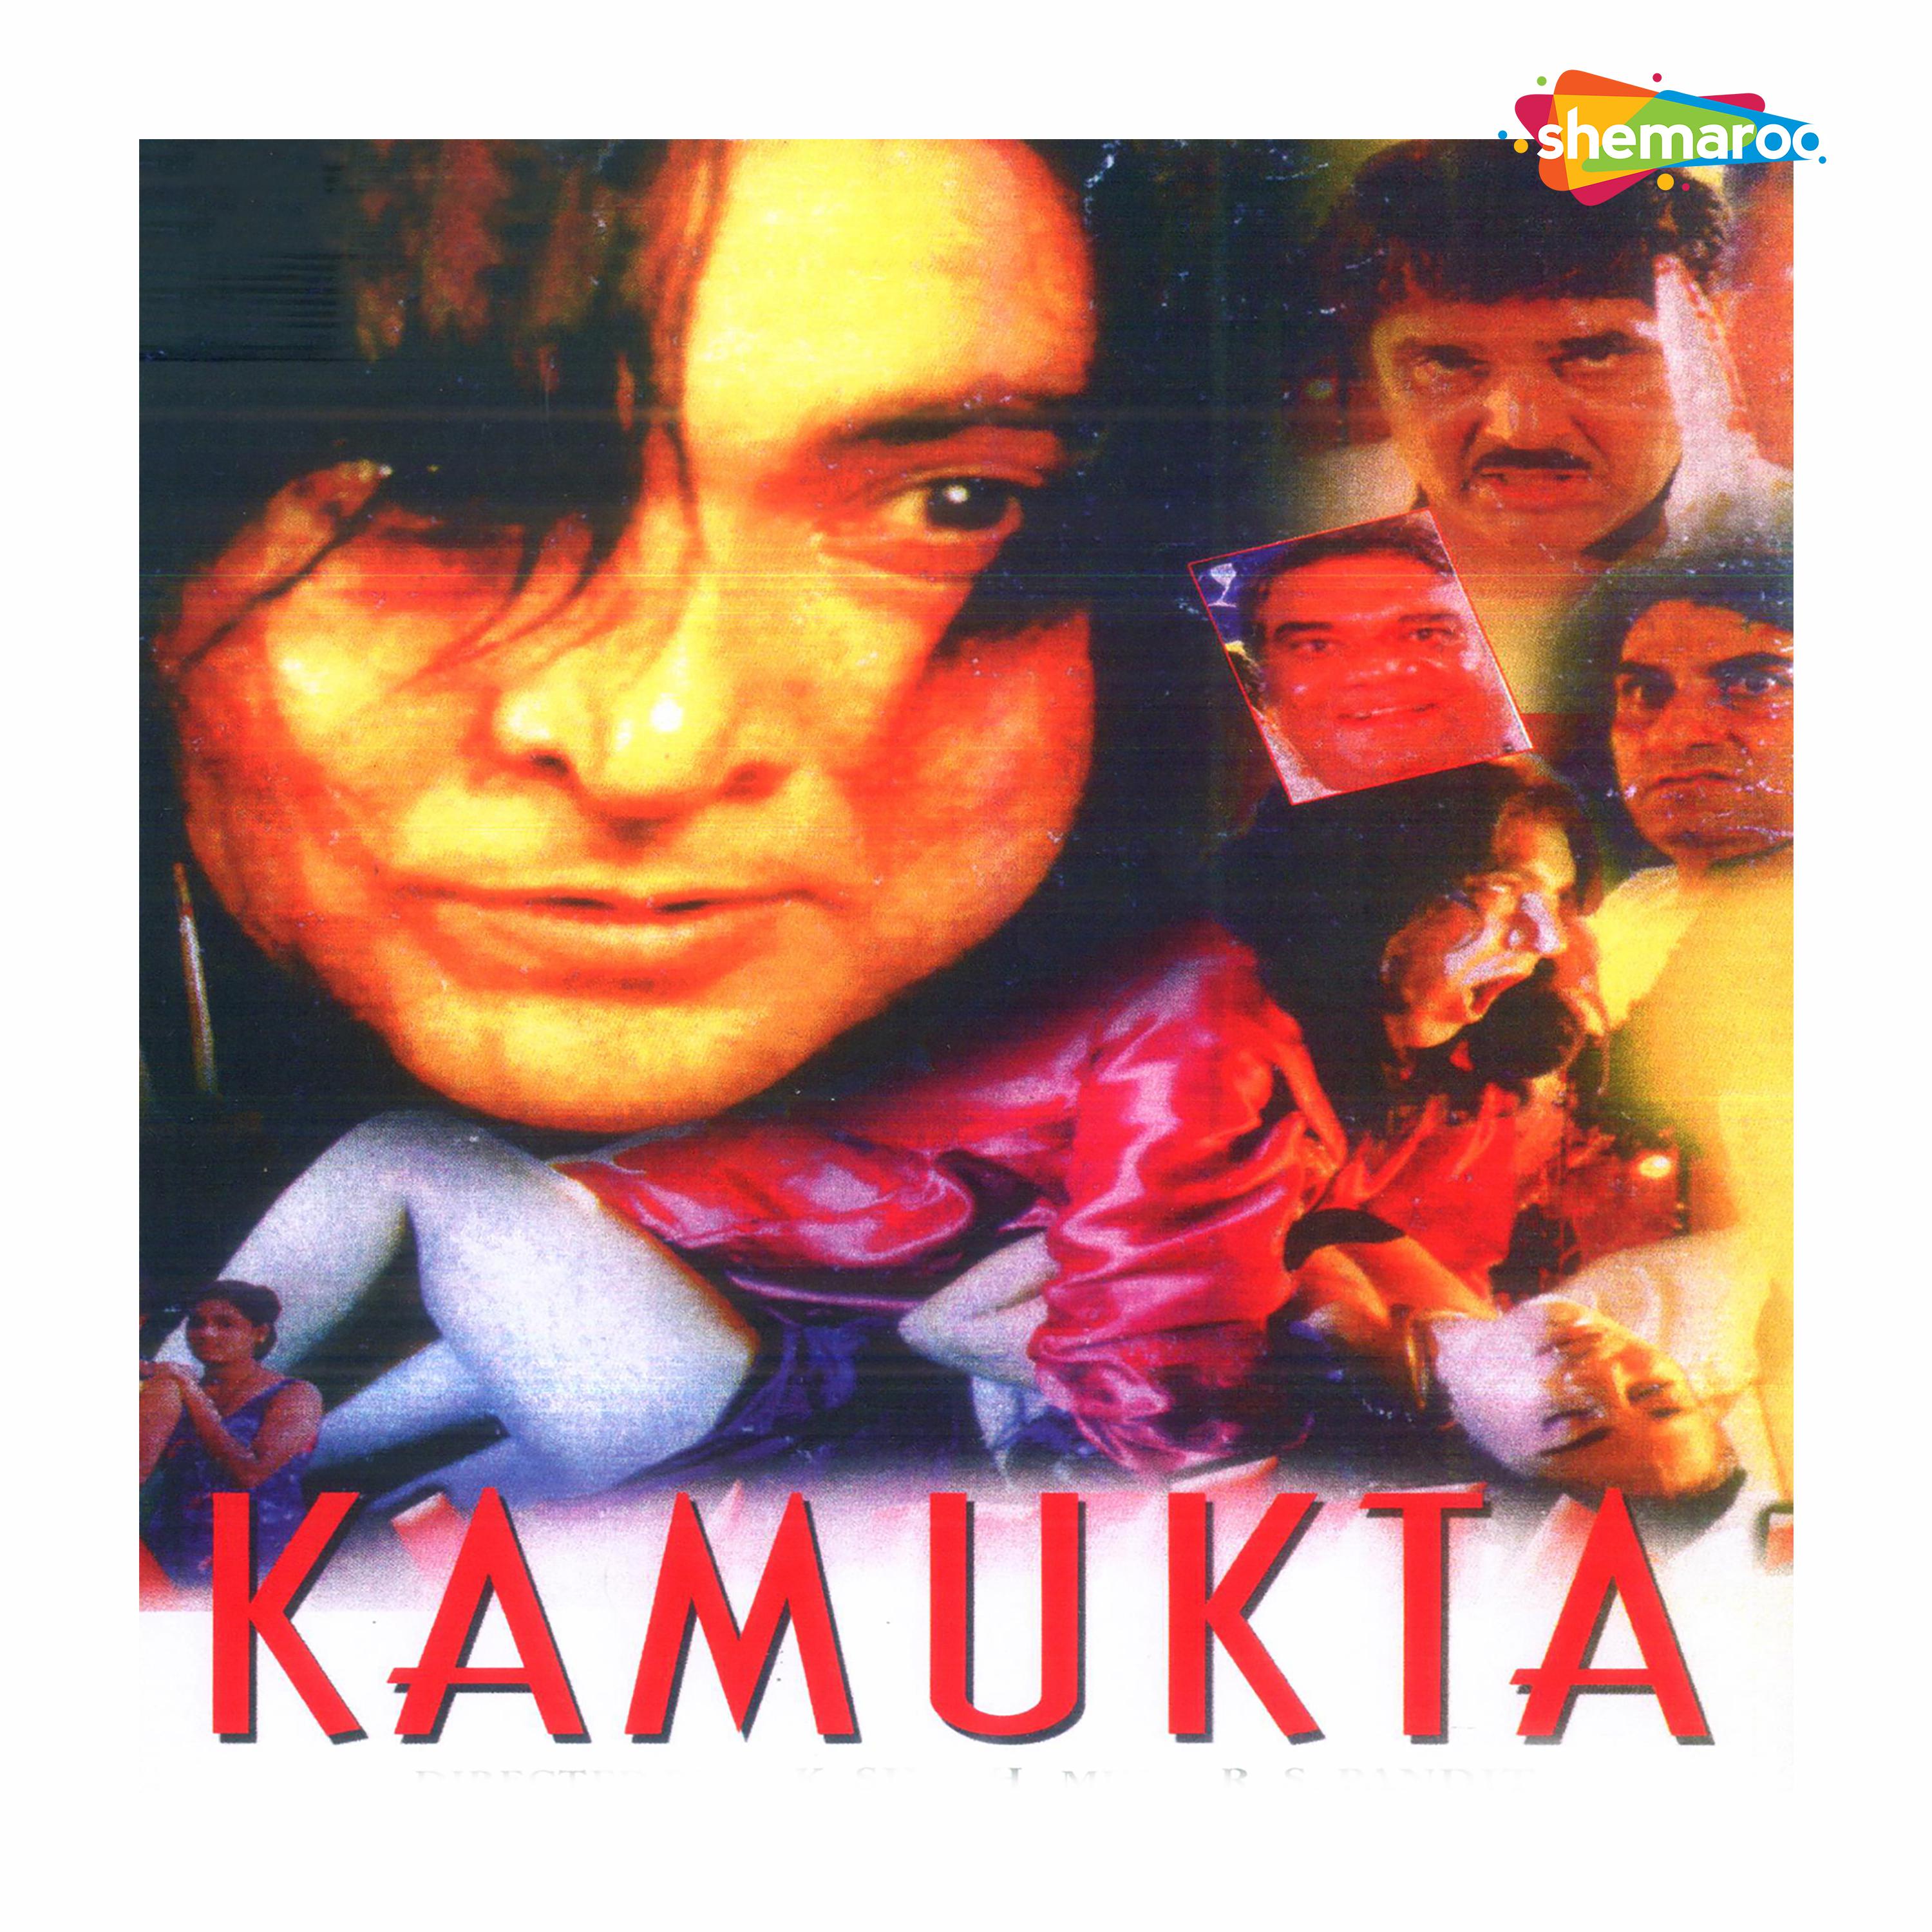 Kamukta (Original Motion Picture Soundtrack)